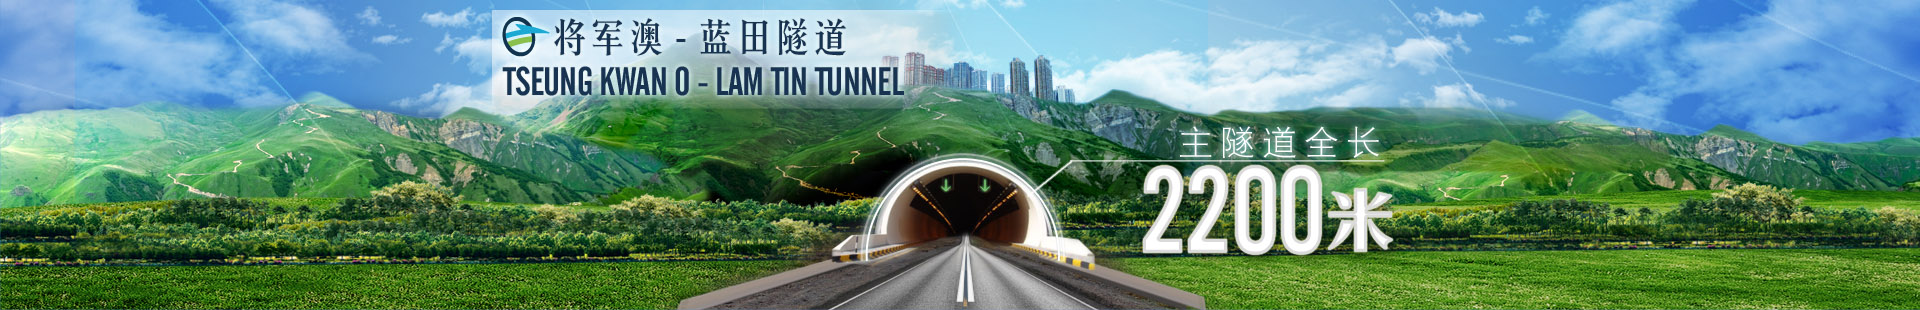 隧道全长2200米